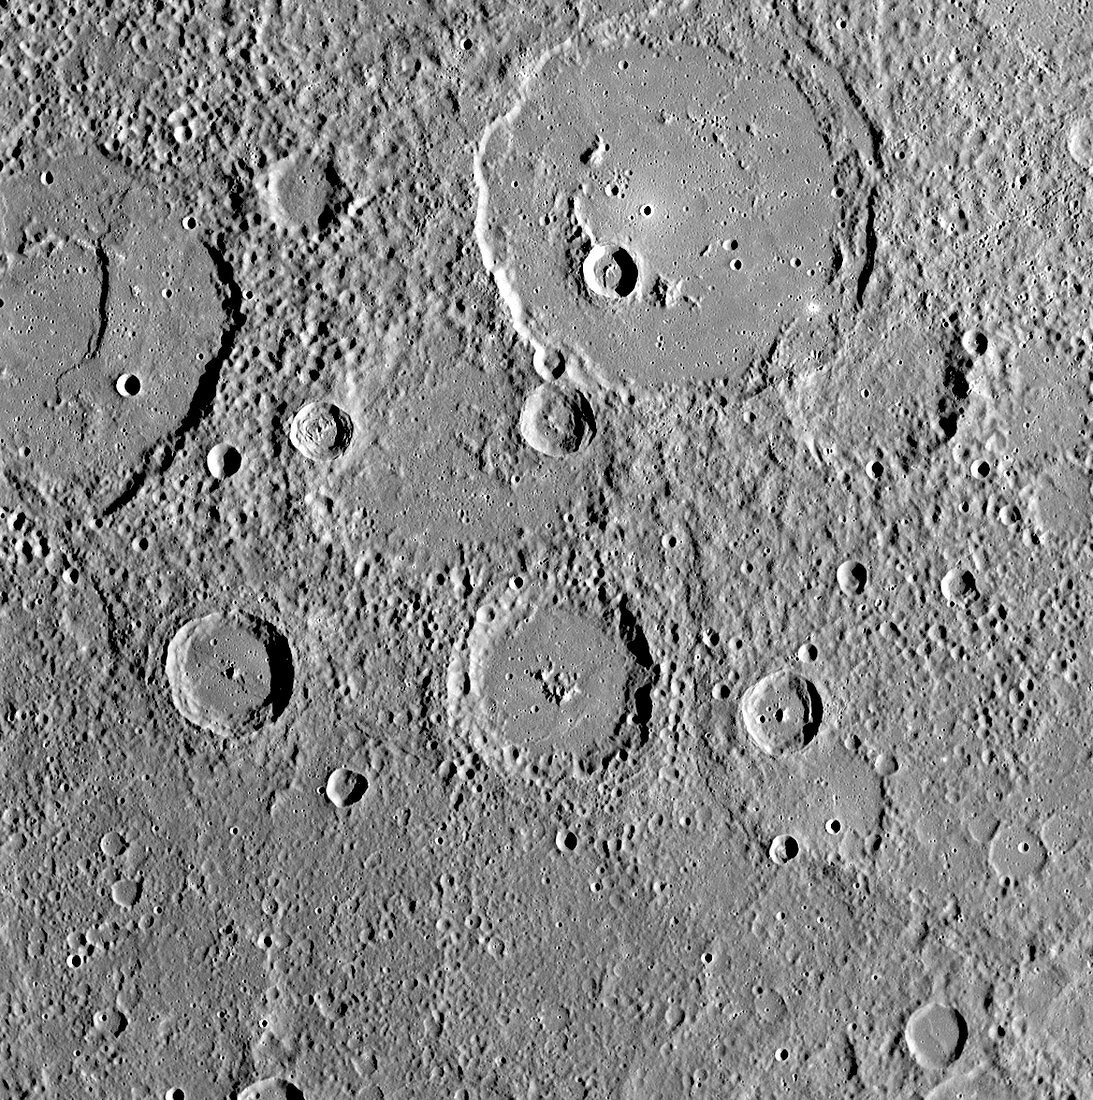 Mercury,MESSENGER October 2008 flyby